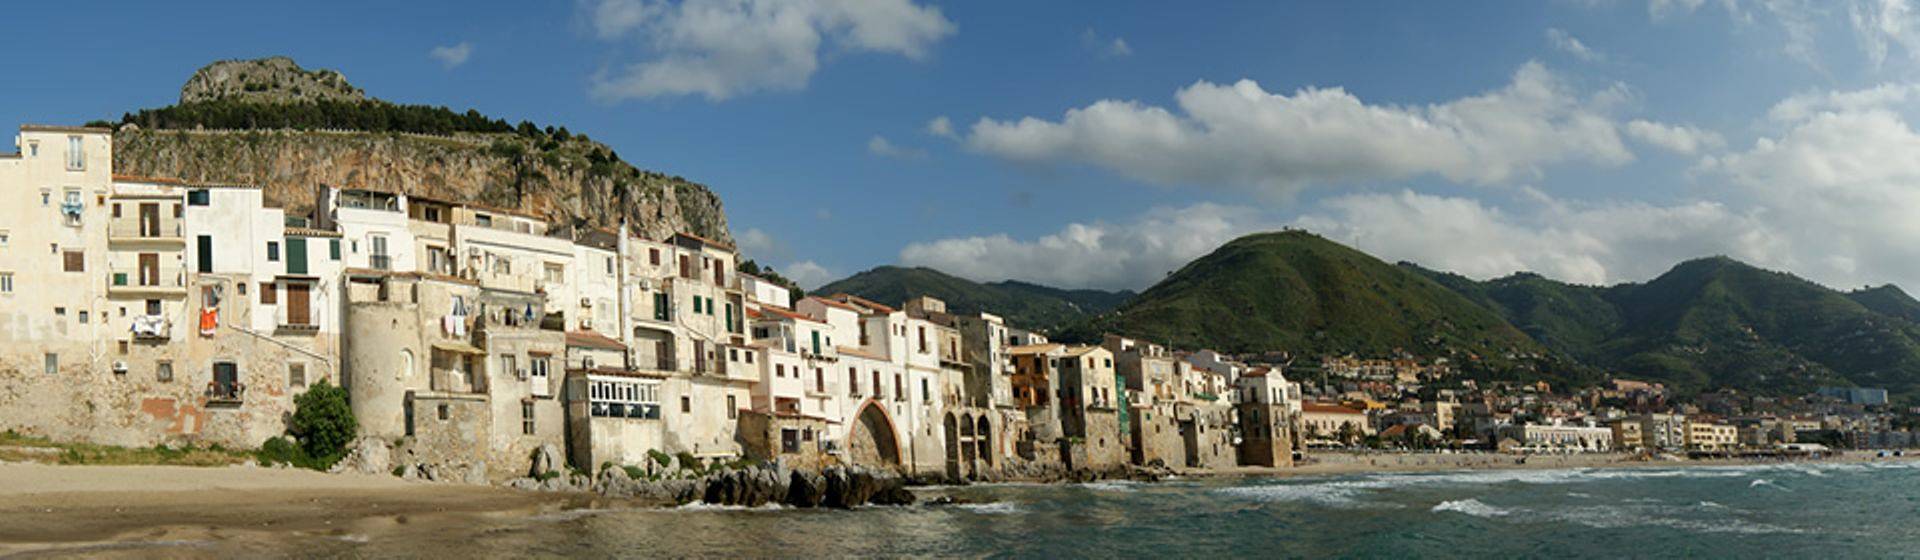 Holidays to Sicily Image